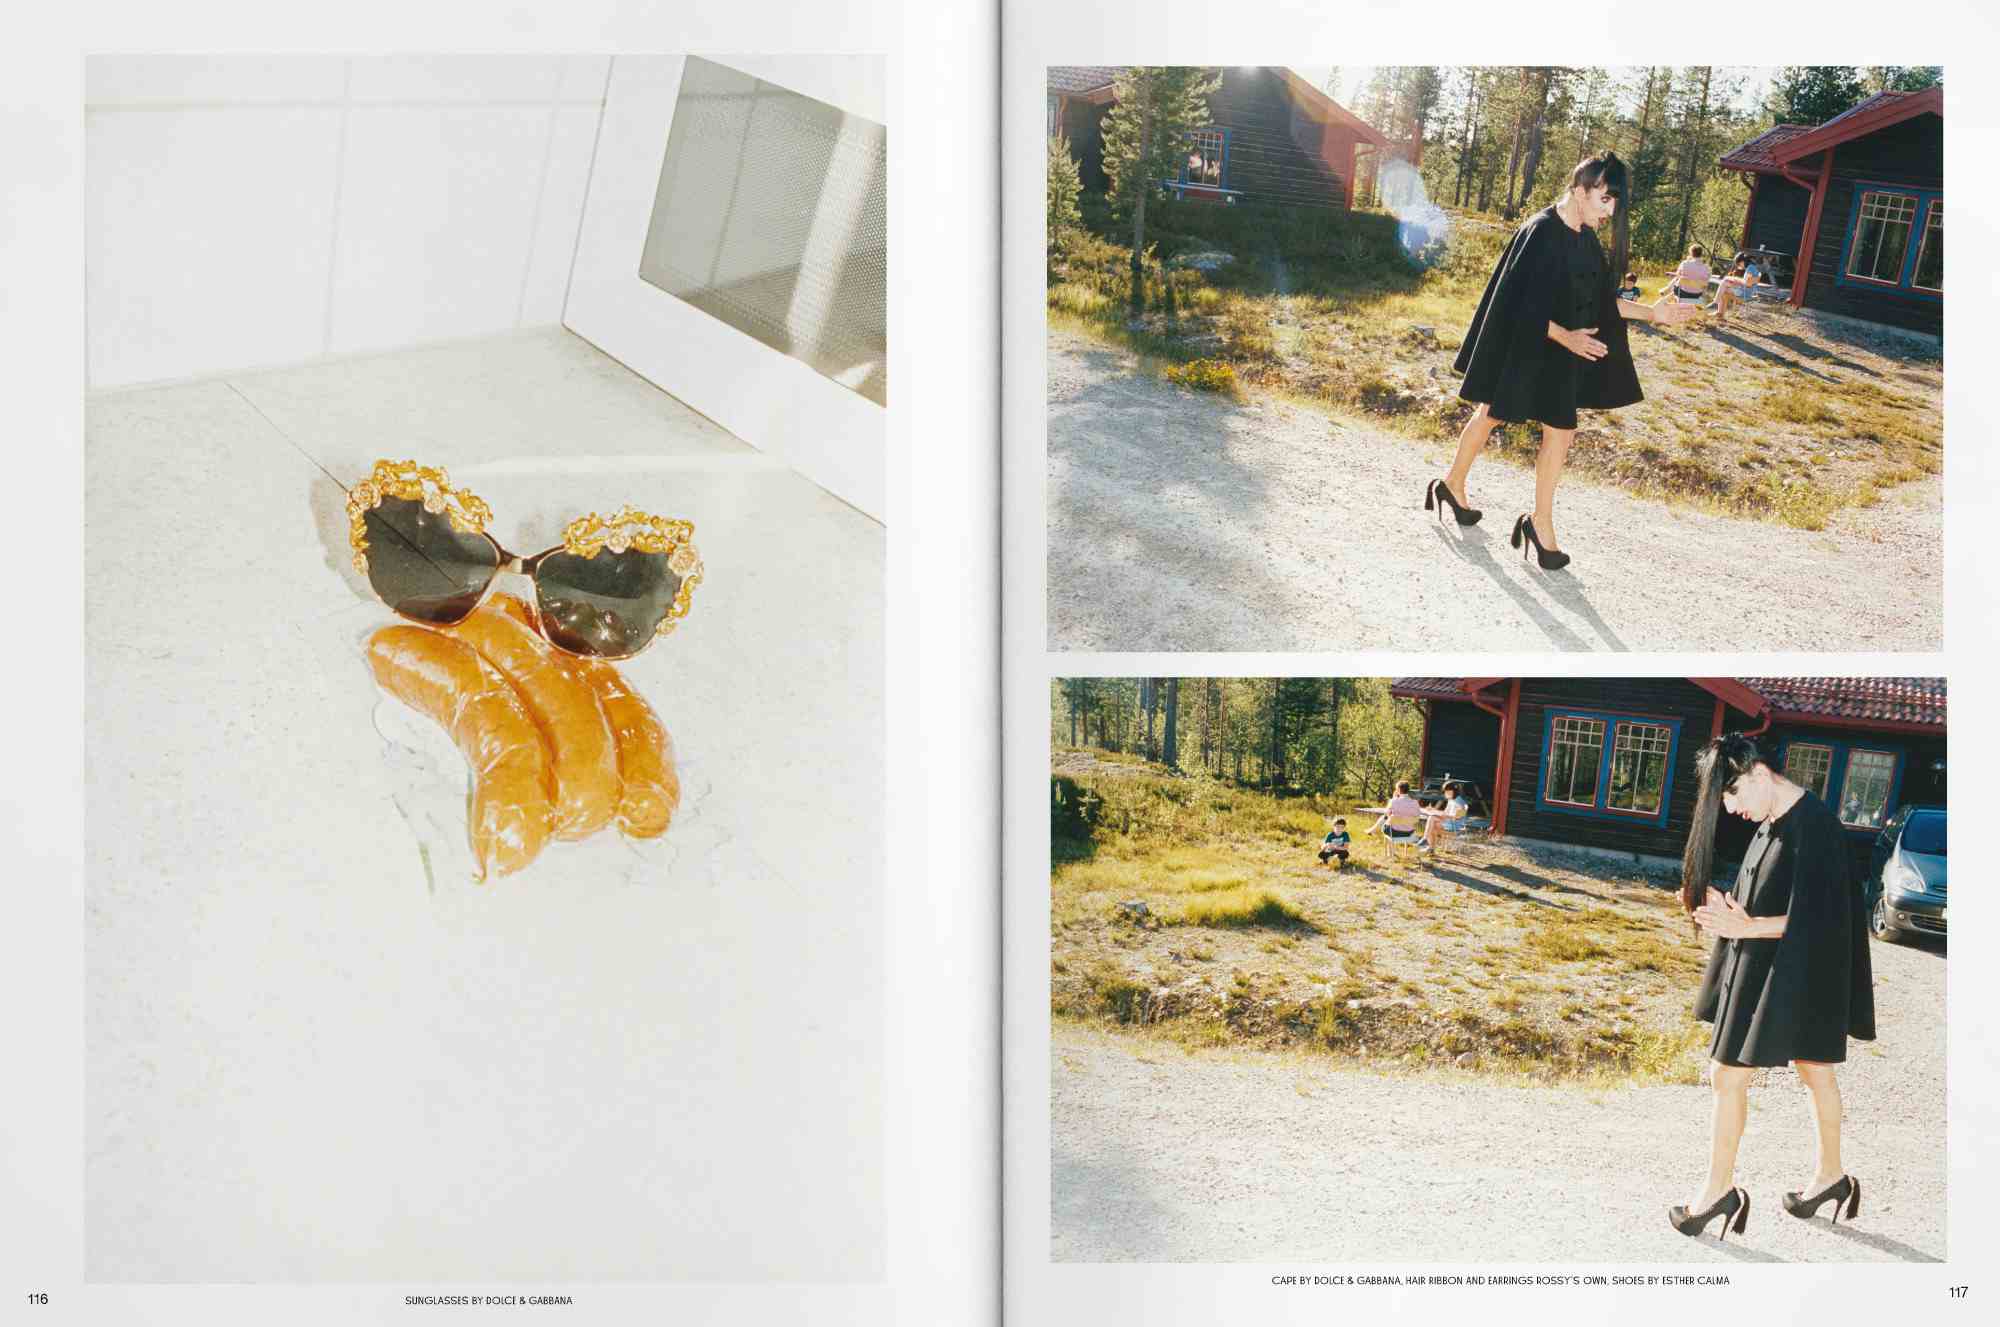 GARAGE MAGAZINE - 2012
Photographer: Juergen Teller
Model: Rossy De Palma
Location: Fulufjället - Sweden